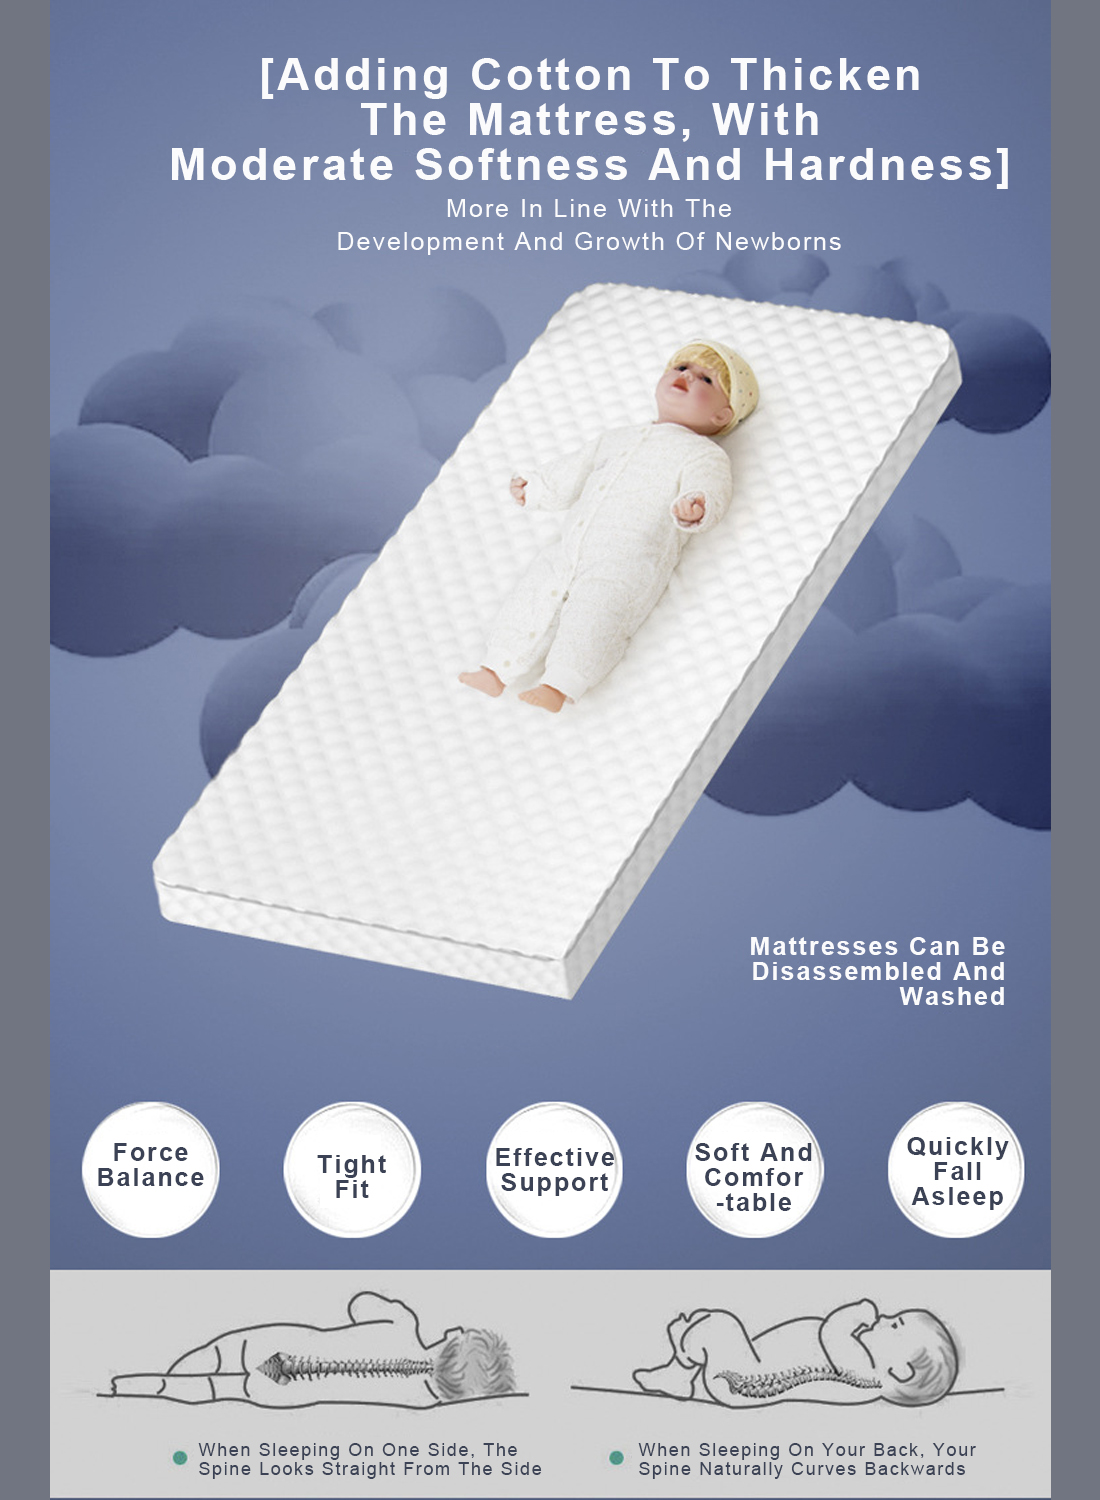 Multi Functional Foldable Baby Crib, Mobile and Portable Newborn Crib, Newborn Crib, Splicing Large Bed